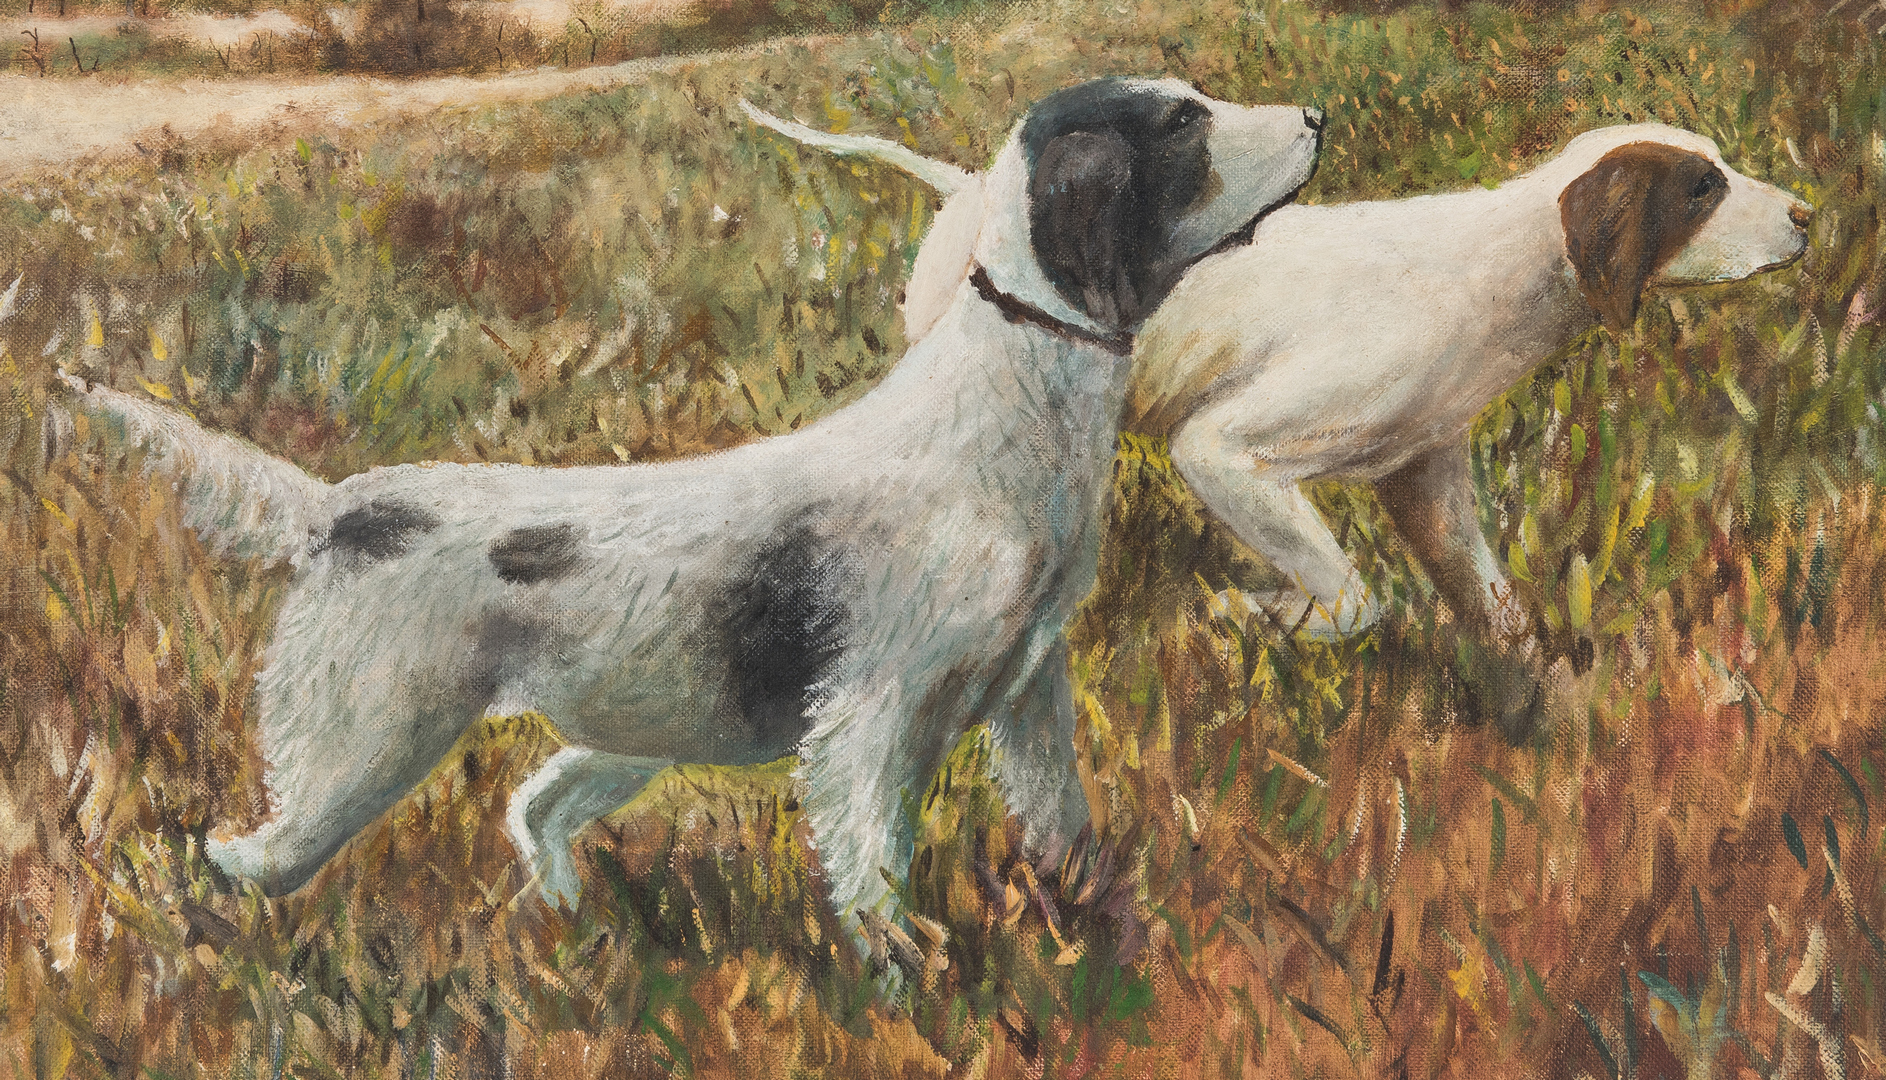 Lot 689: 2 American School Landscape Paintings, Cattle & Dogs